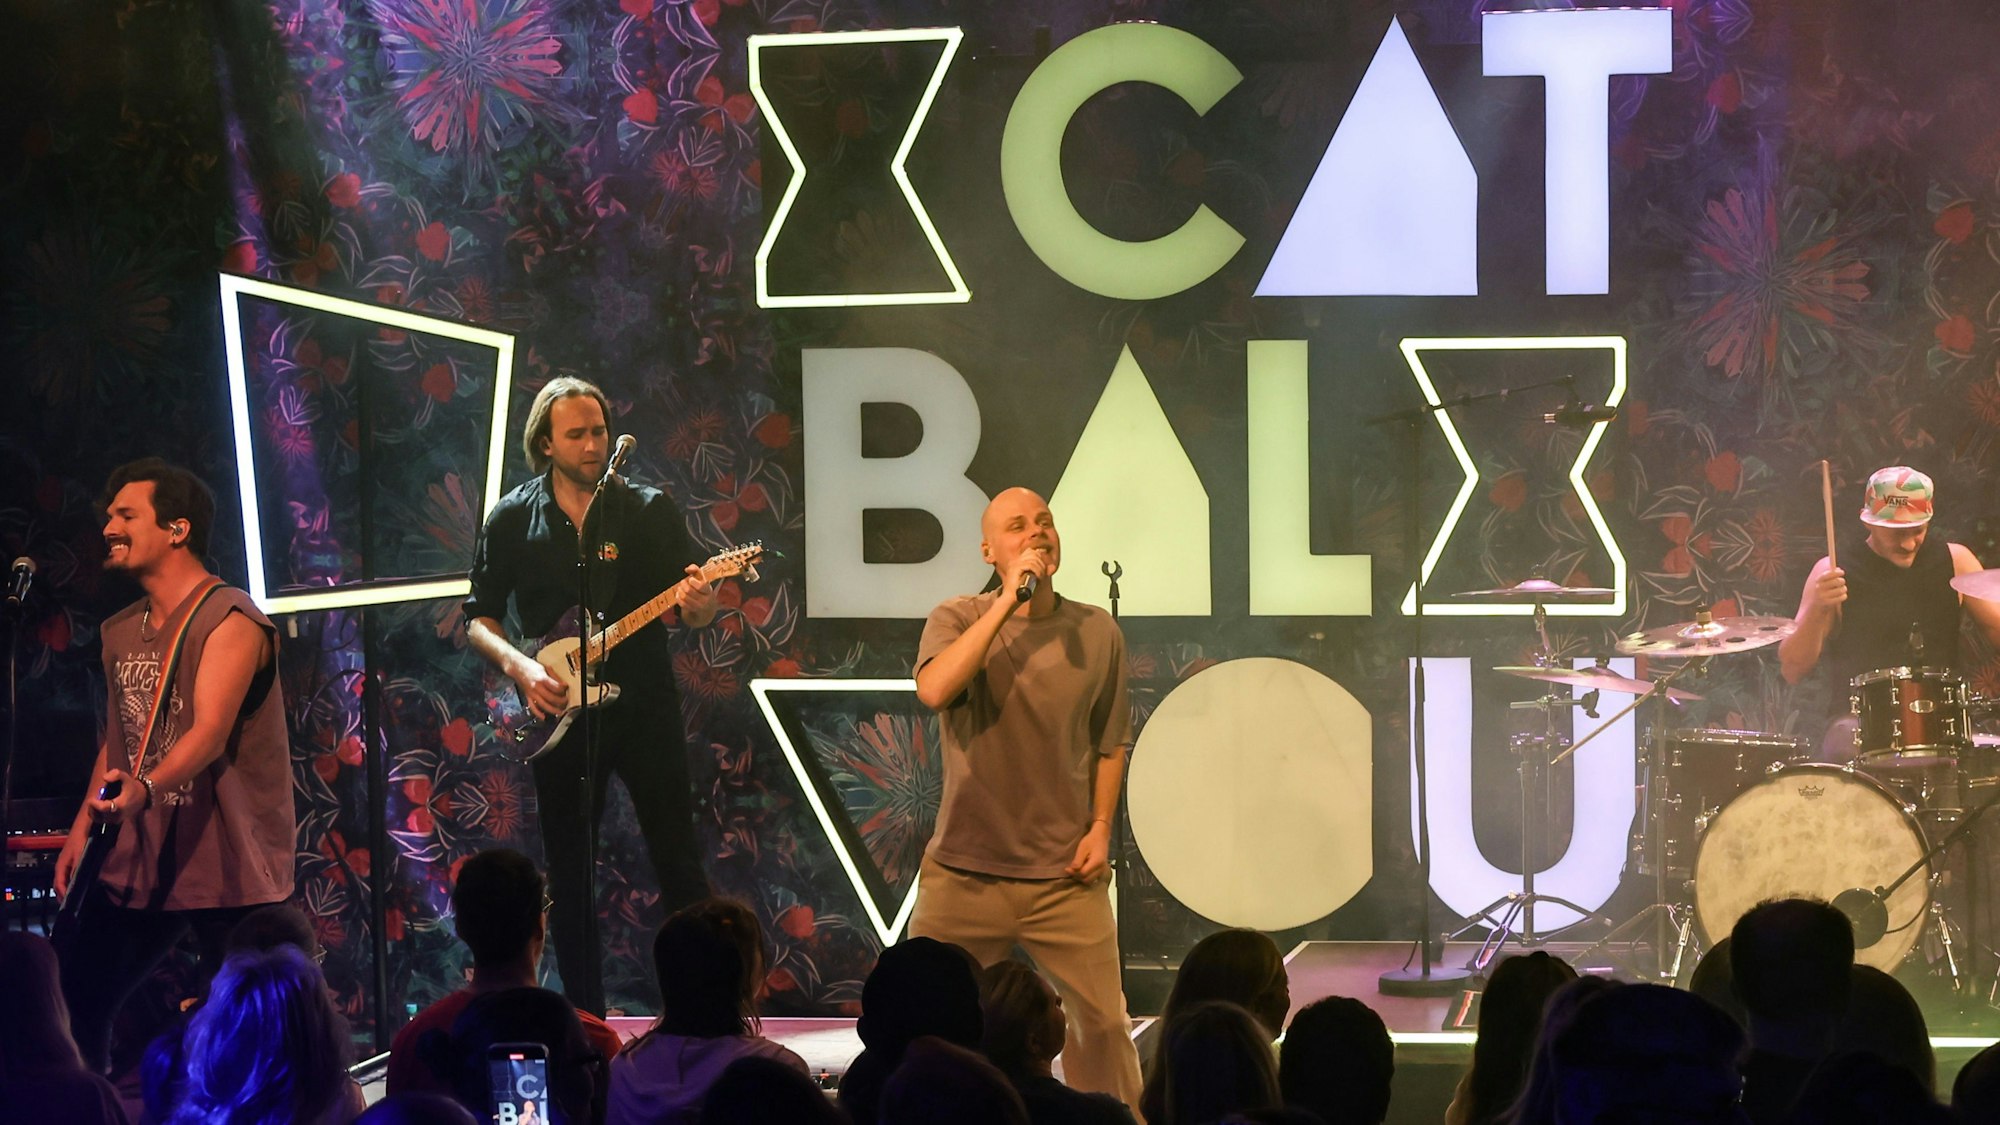 Cat Ballou startet ihre Jubiläumstour zum 25. Bandjubiläum.